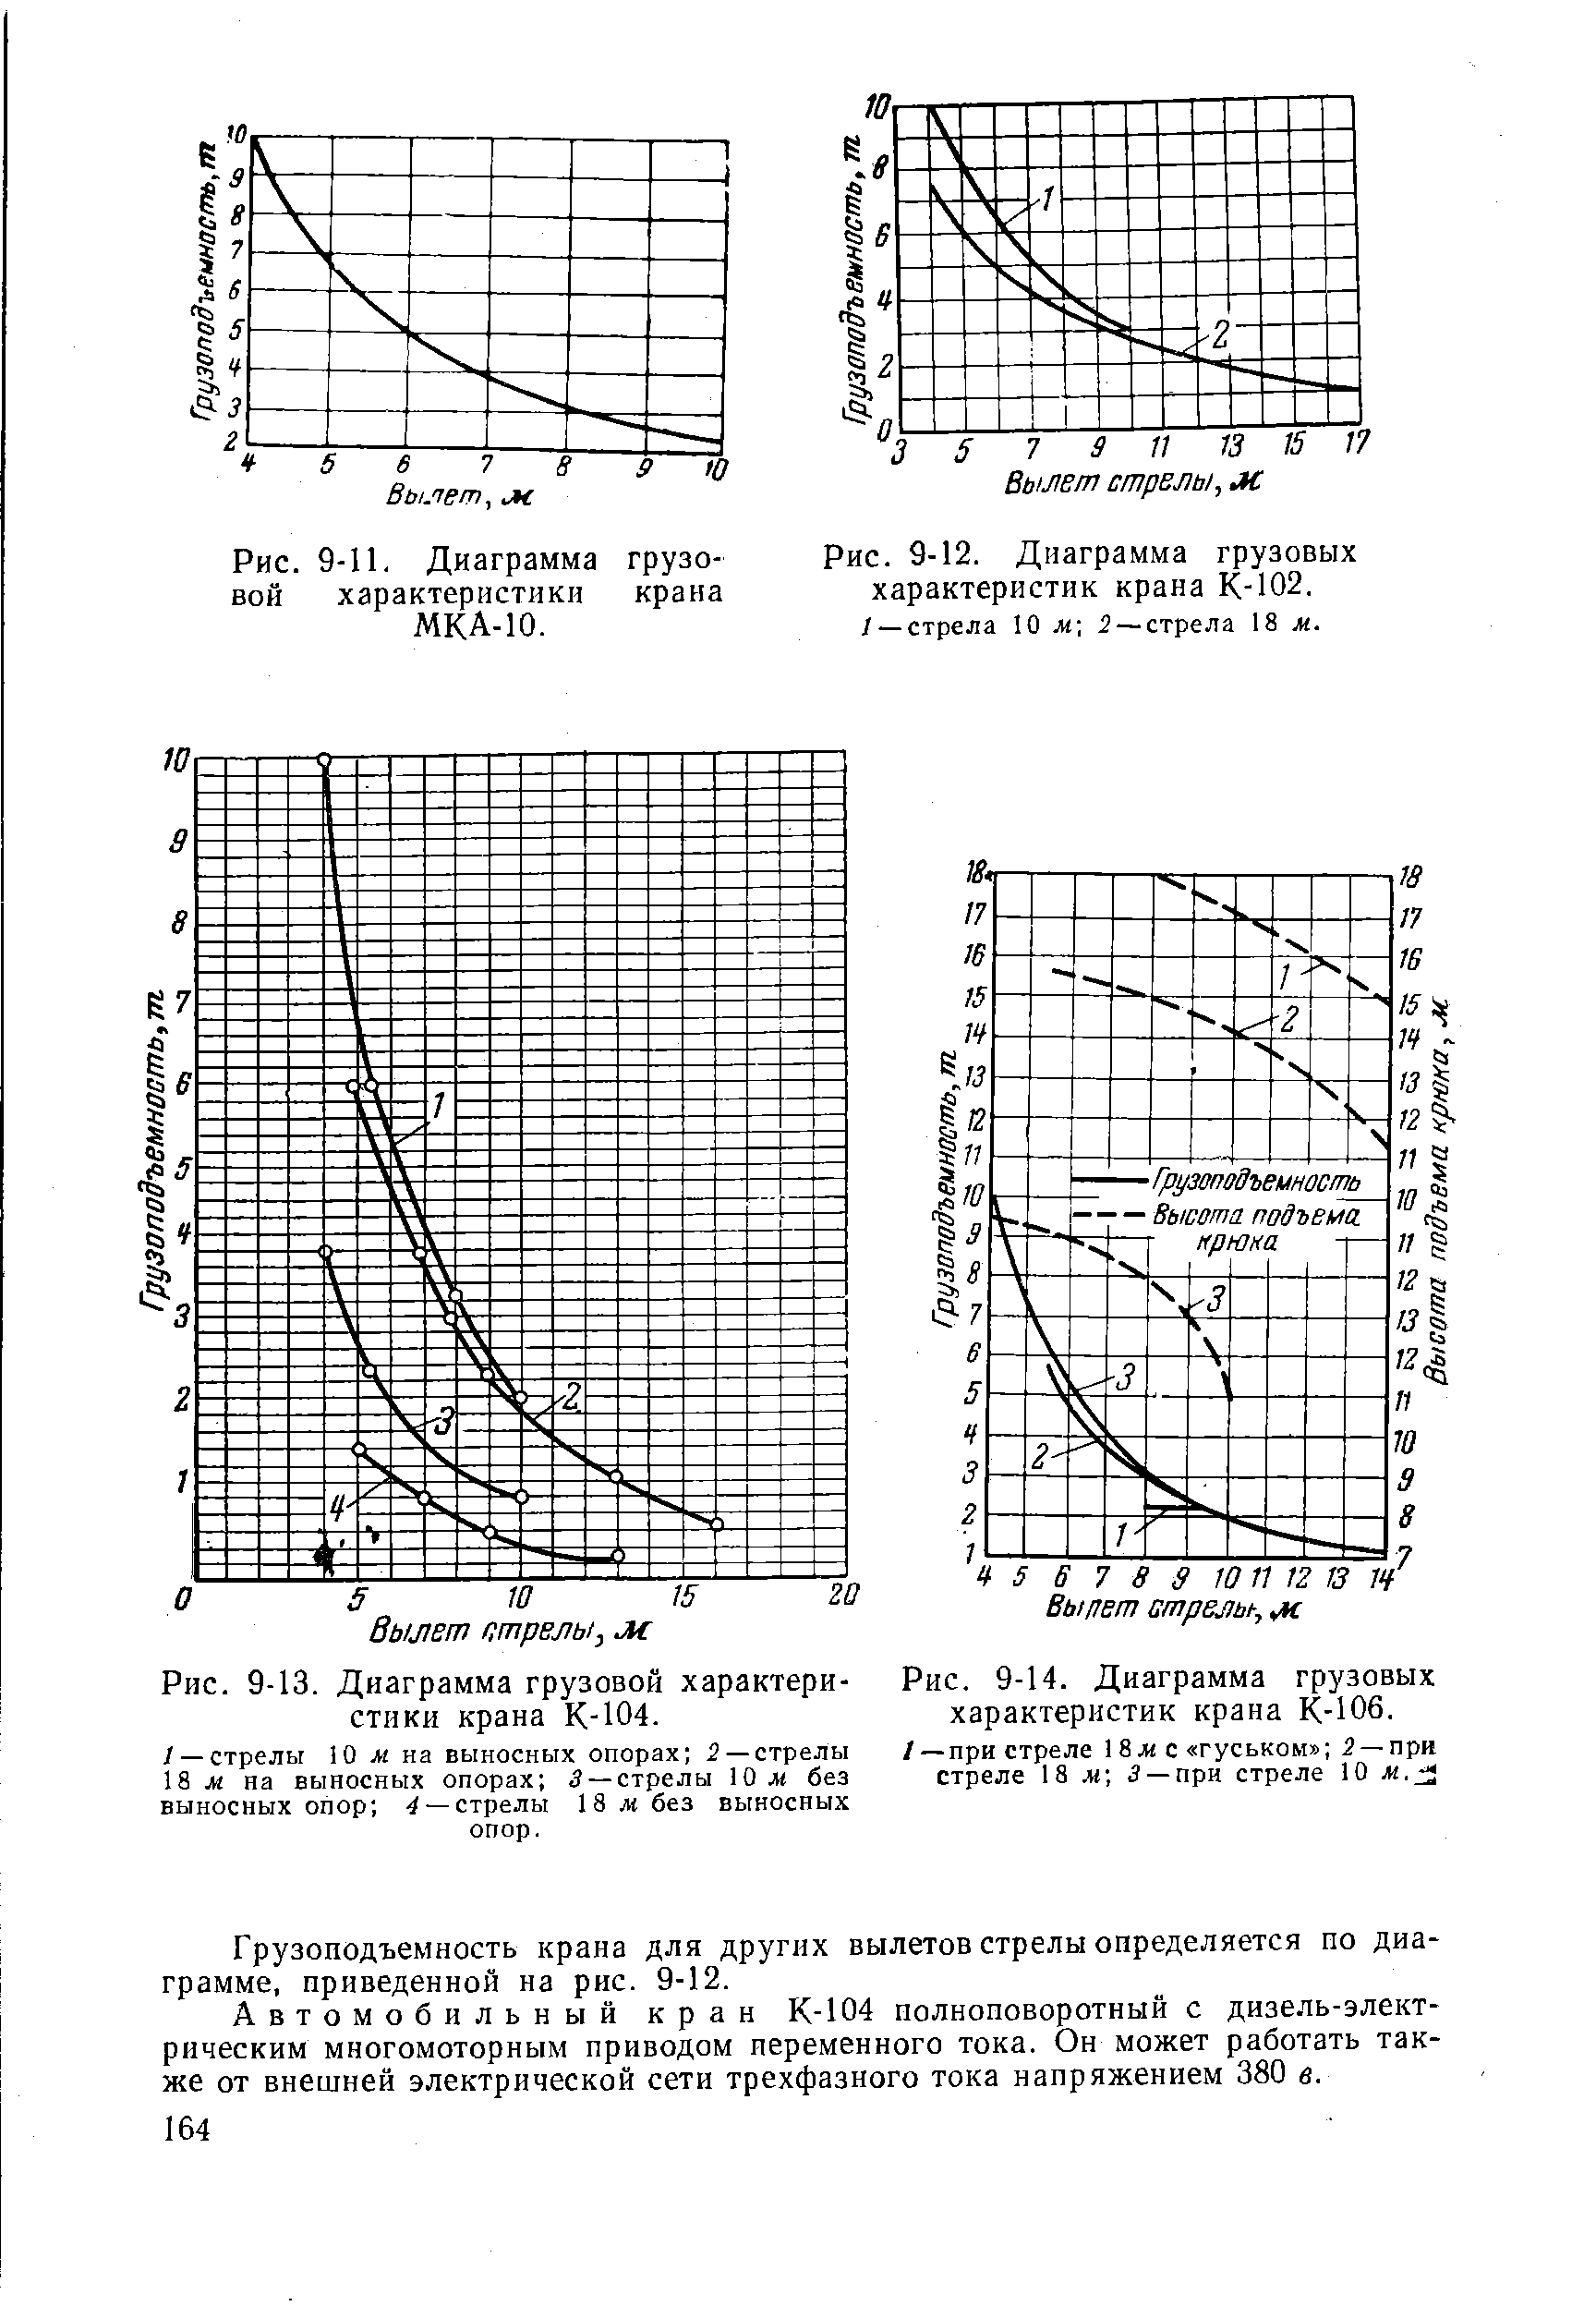 Рис. 9-13. Диаграмма <a href="/info/322212">грузовой характеристики</a> крана К-104.
